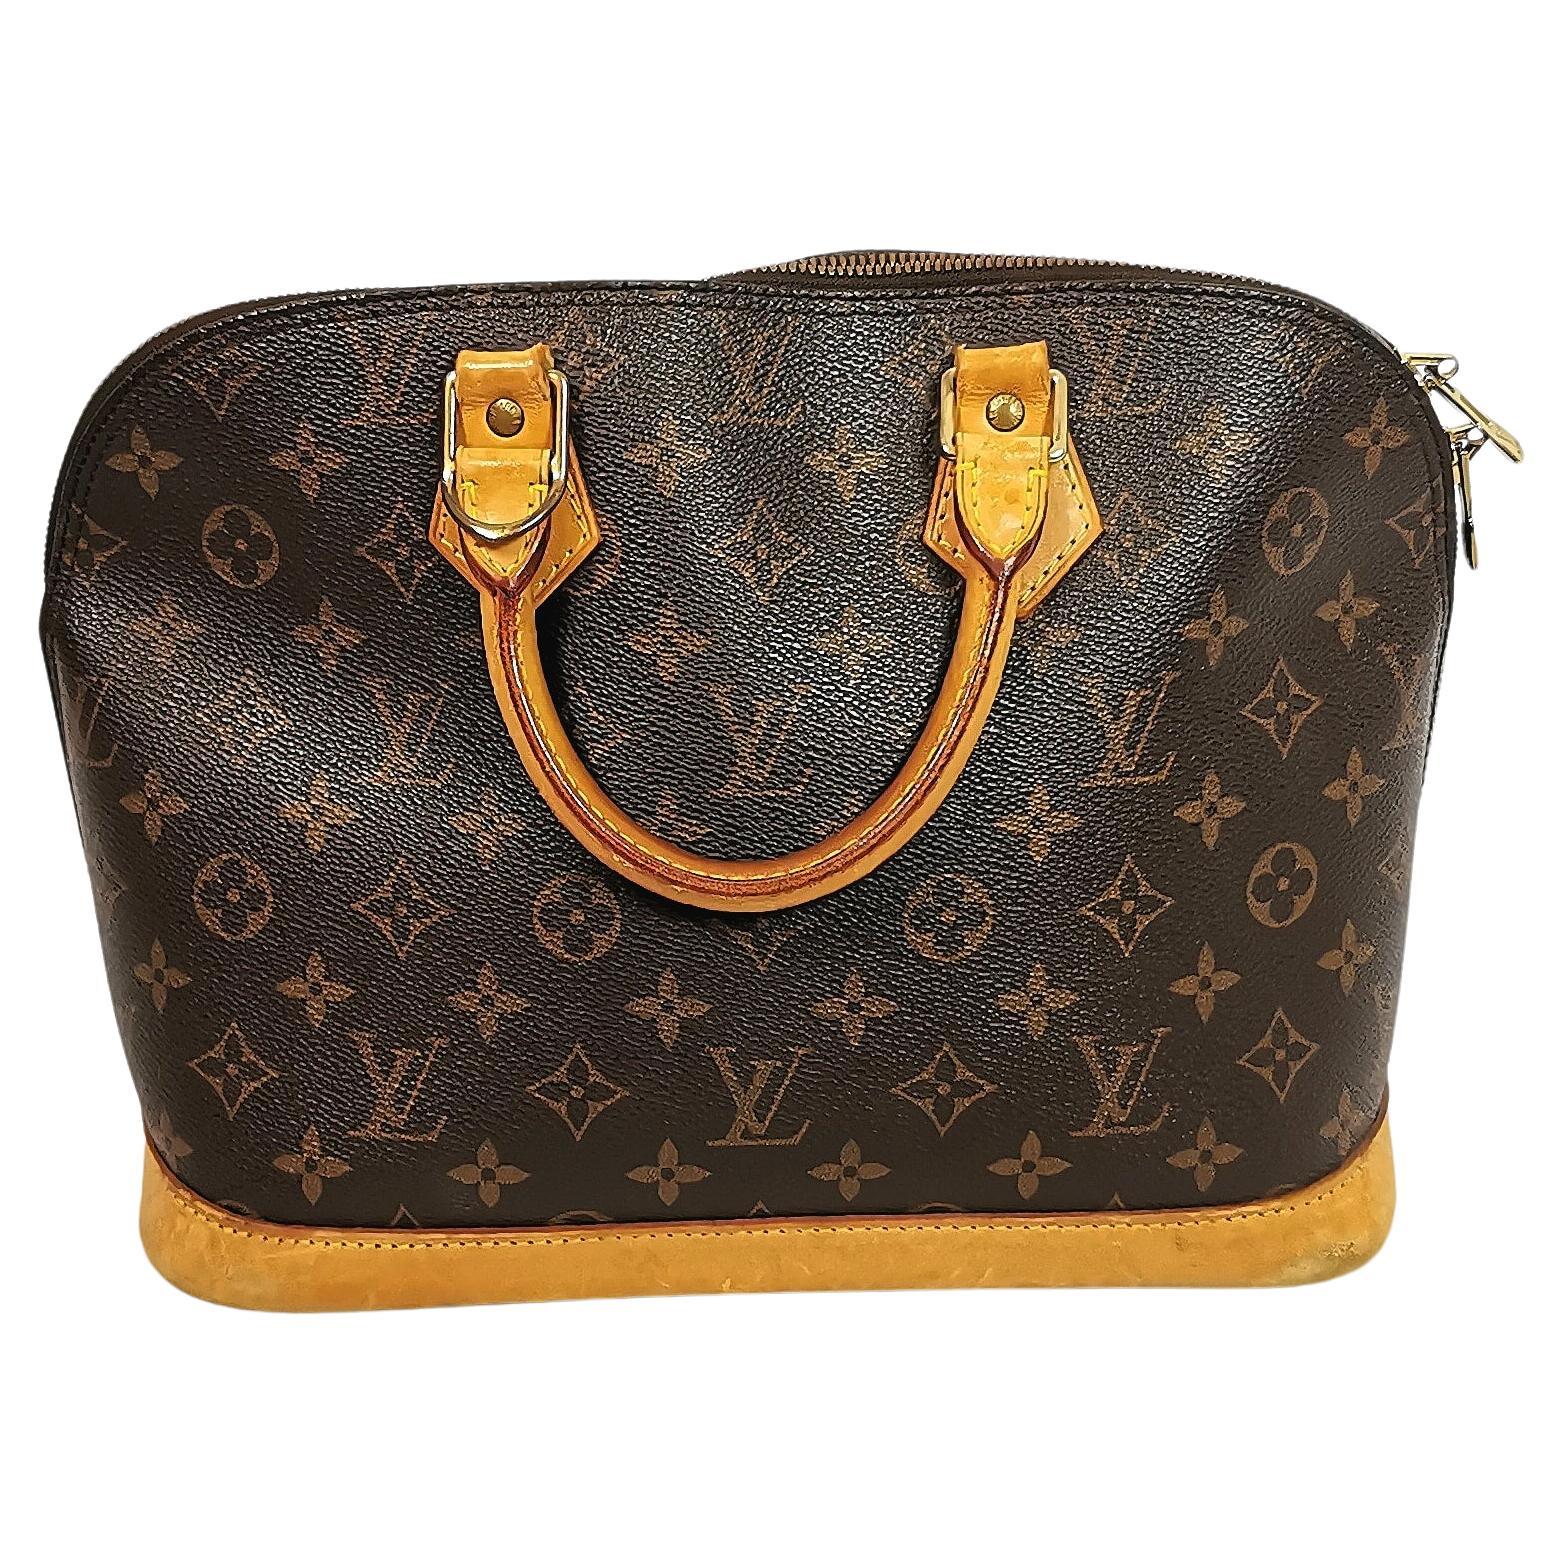 Vintage Louis Vuitton Alma MM handbag, top handle, 1998 For Sale